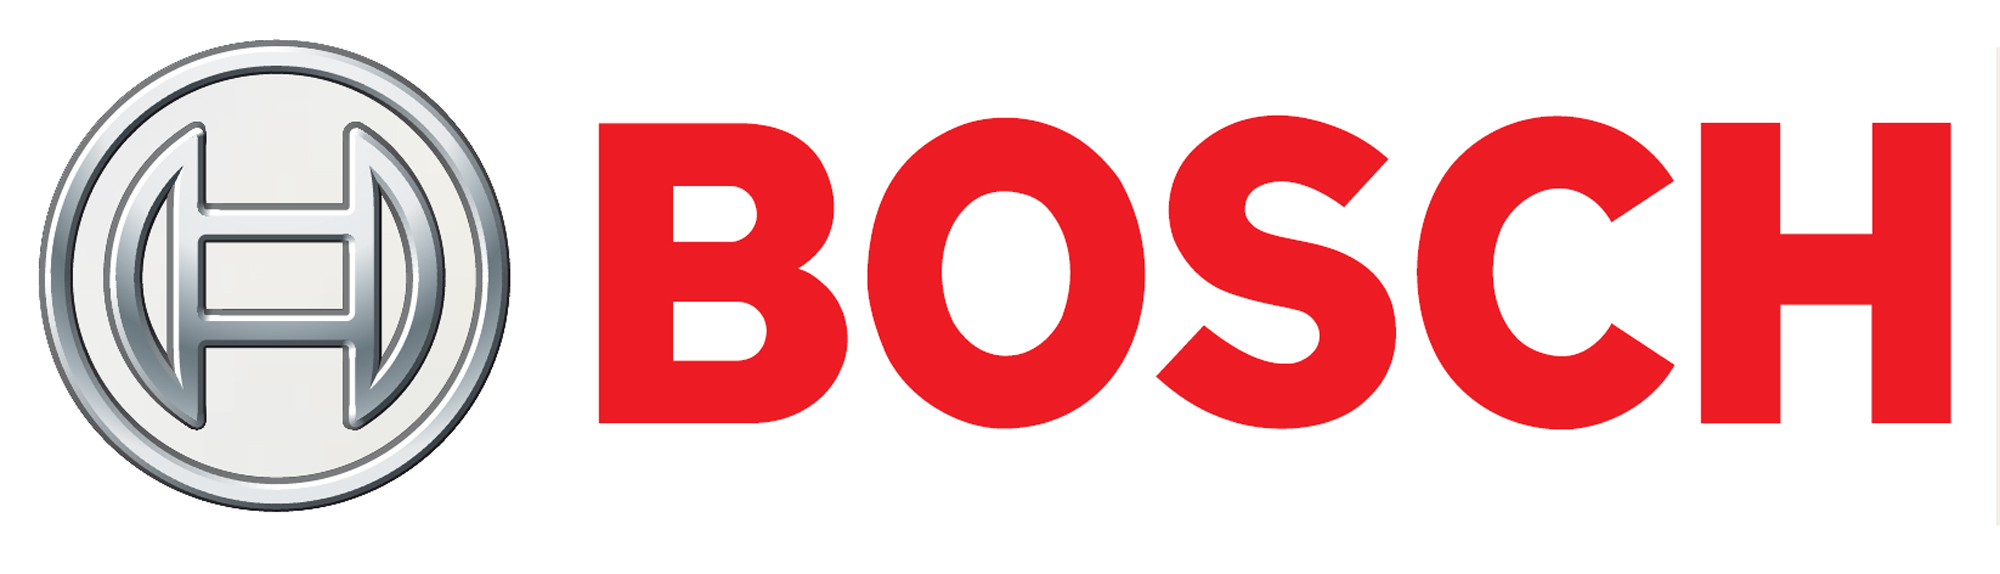 BASSET AUTO - logo Bosch